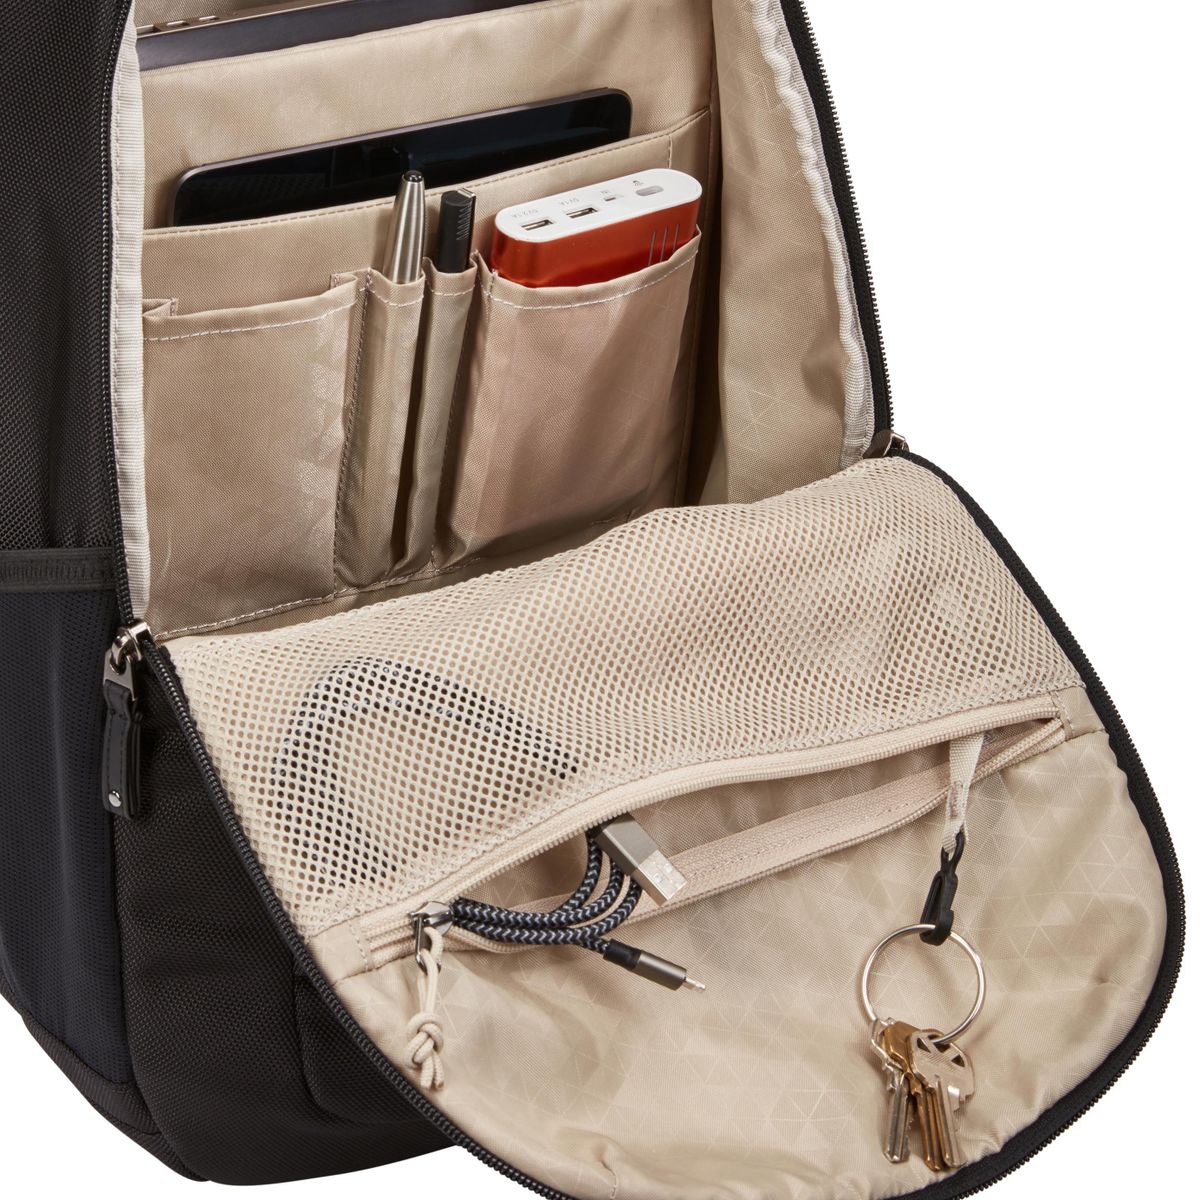 Case Logic Notion 14" Laptop Backpack